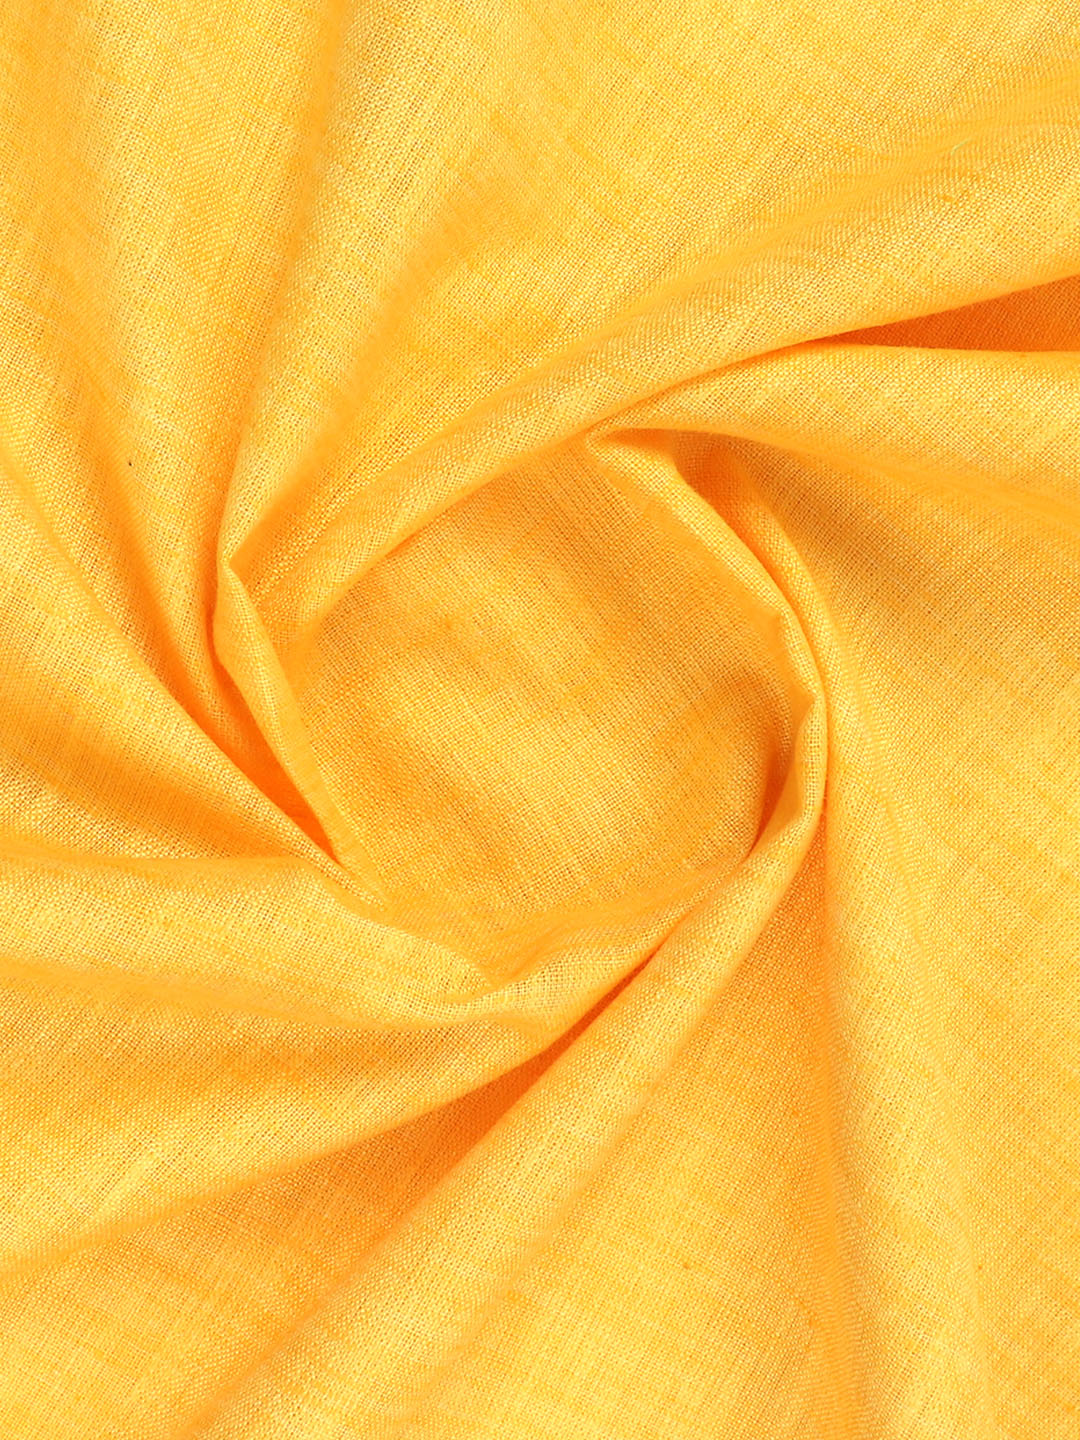 Cotton Blend Yellow Colour Kurtha Fabric Lampus